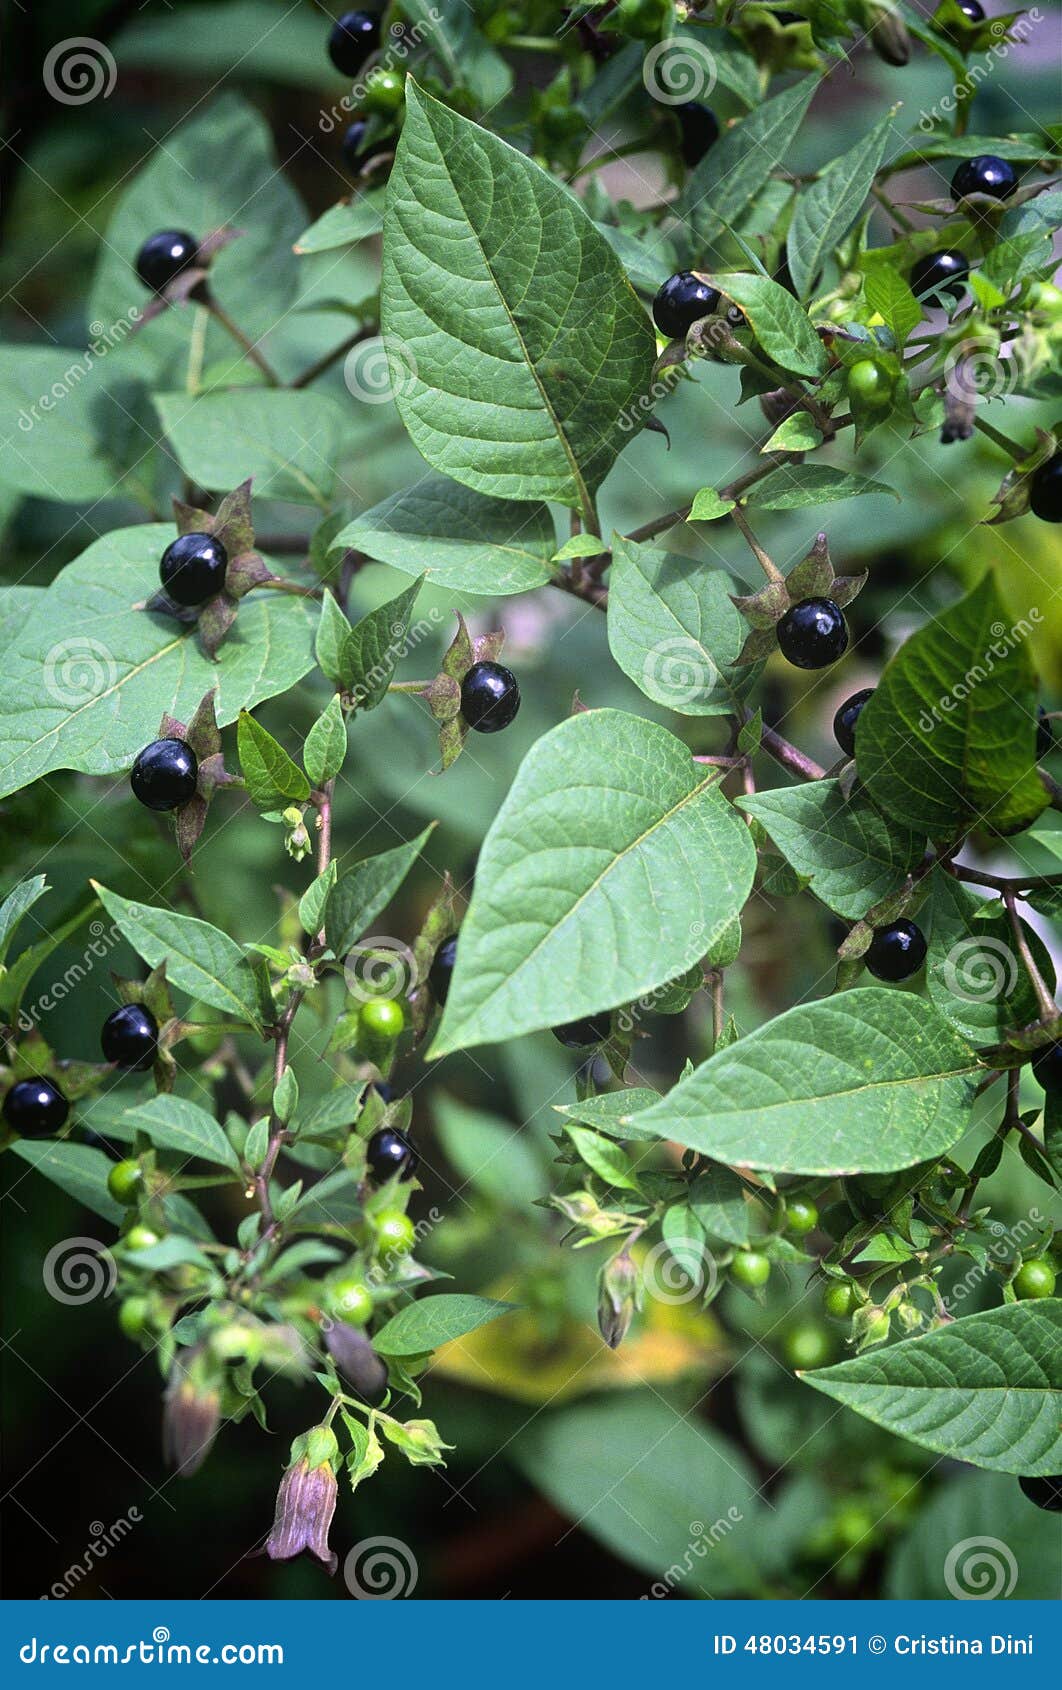 deadly nightshade (atropa belladonna), berries and flowers